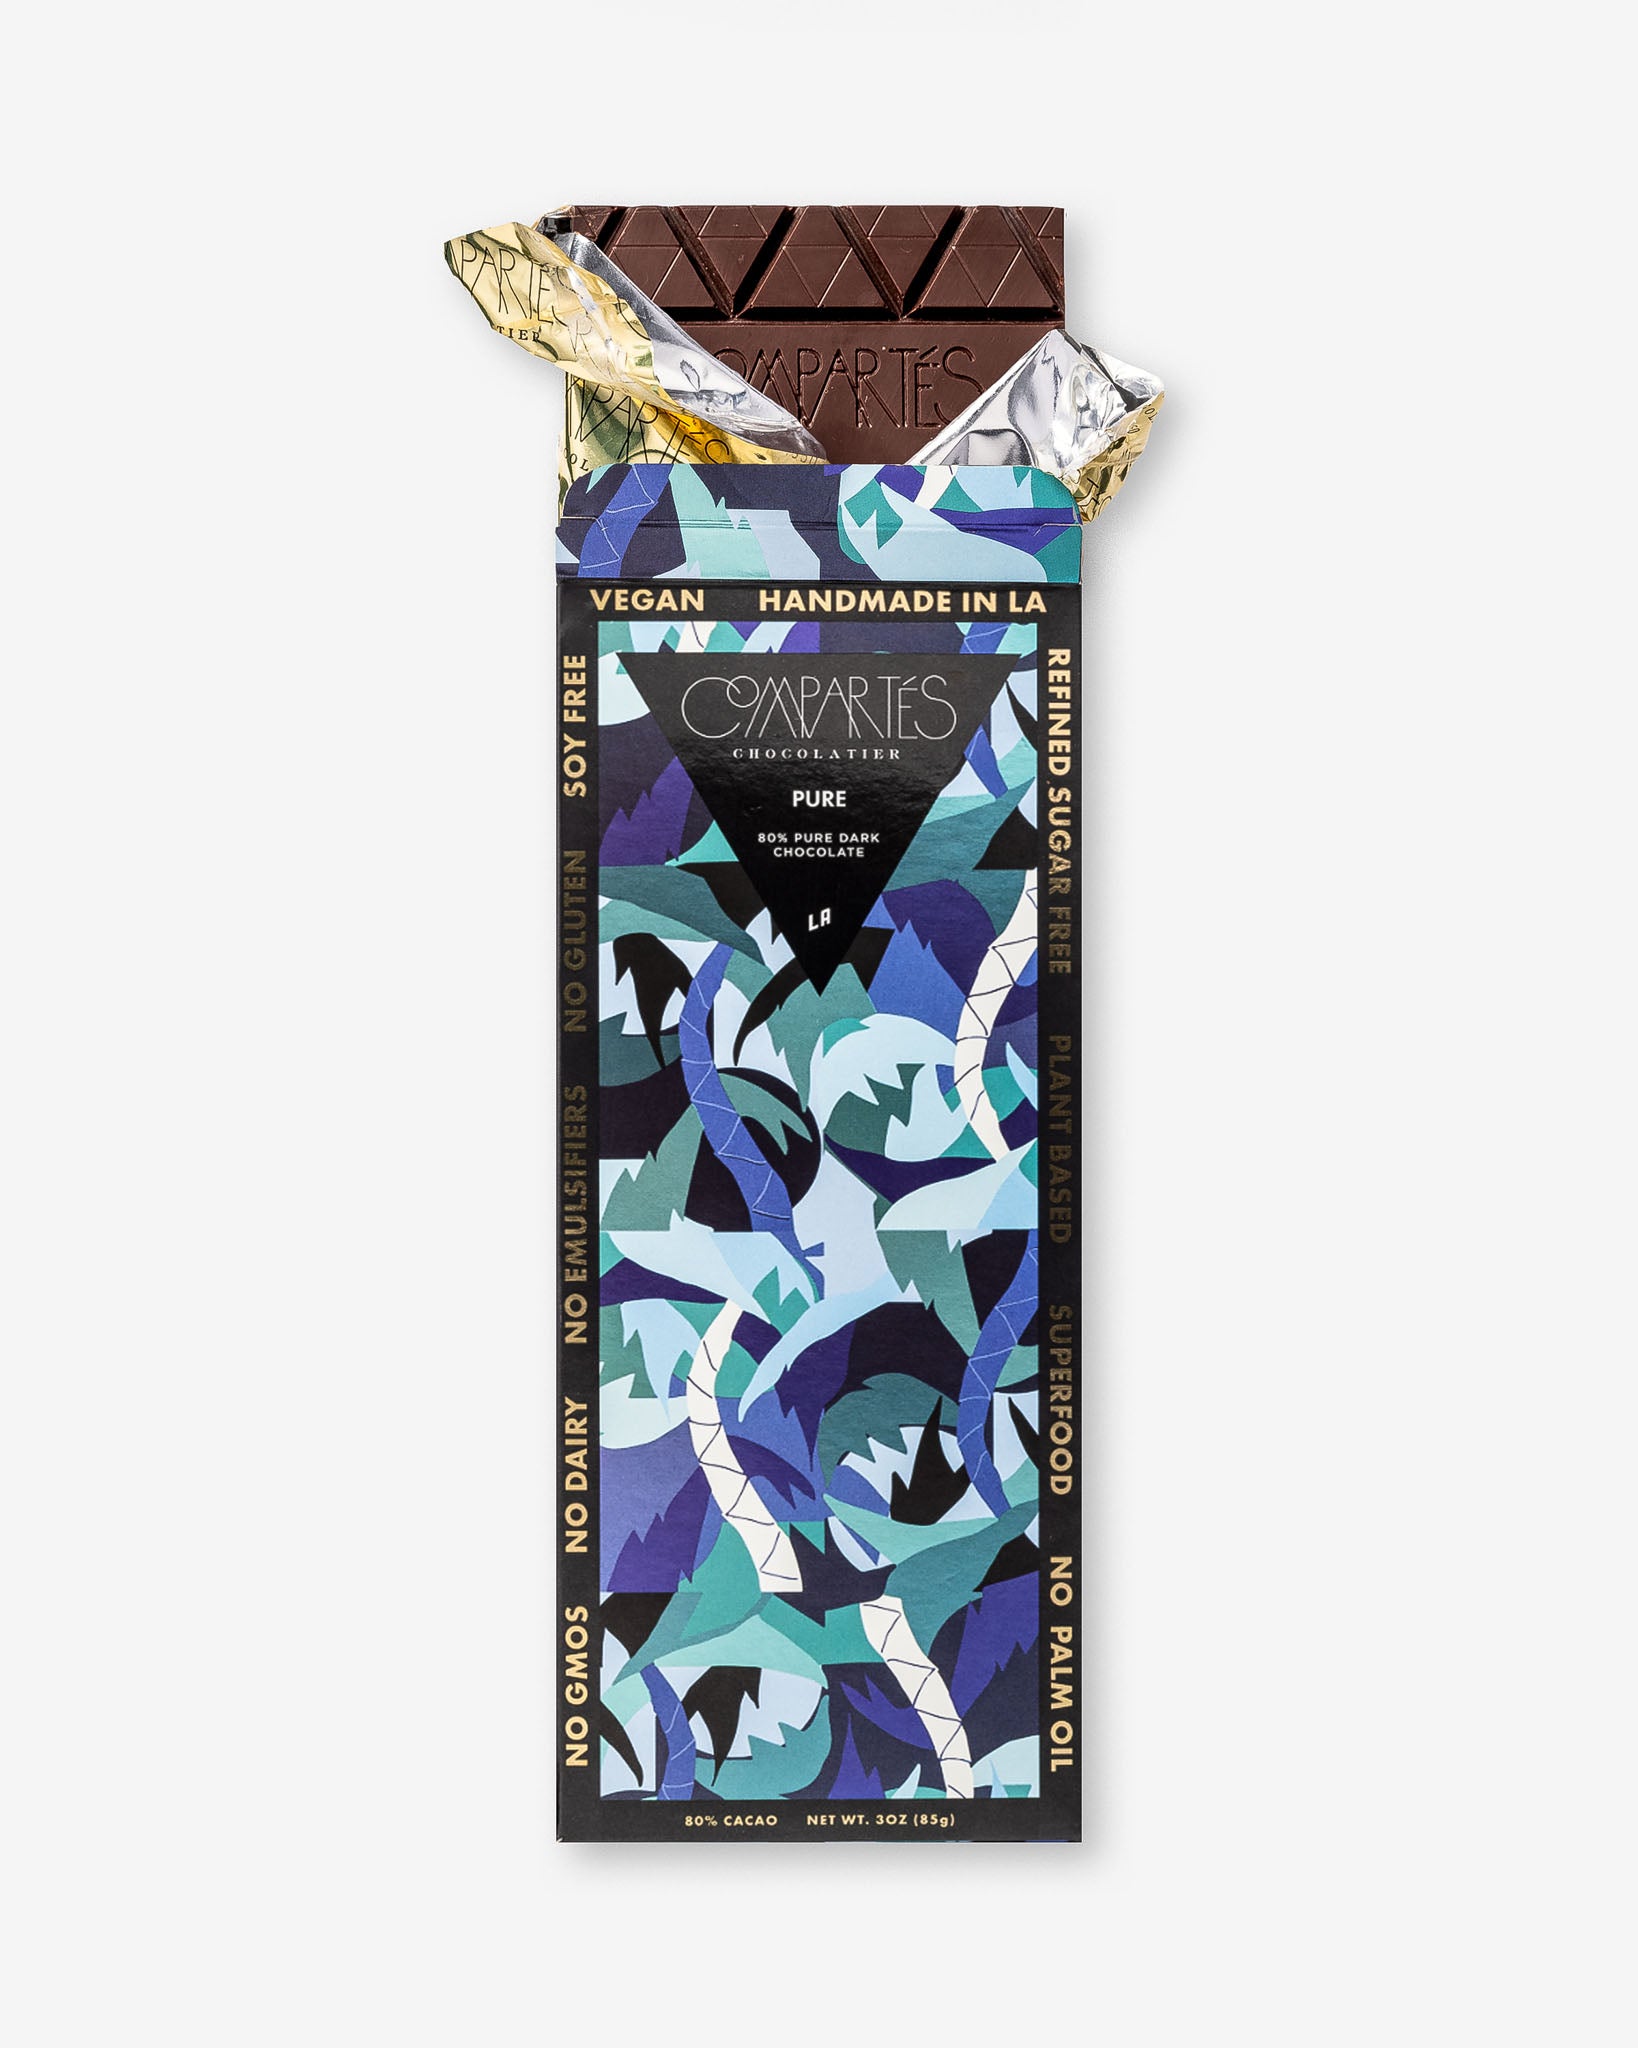 Vegan Dark Chocolate Bar - Compartes Pure Organic Chocolate - Los angeles